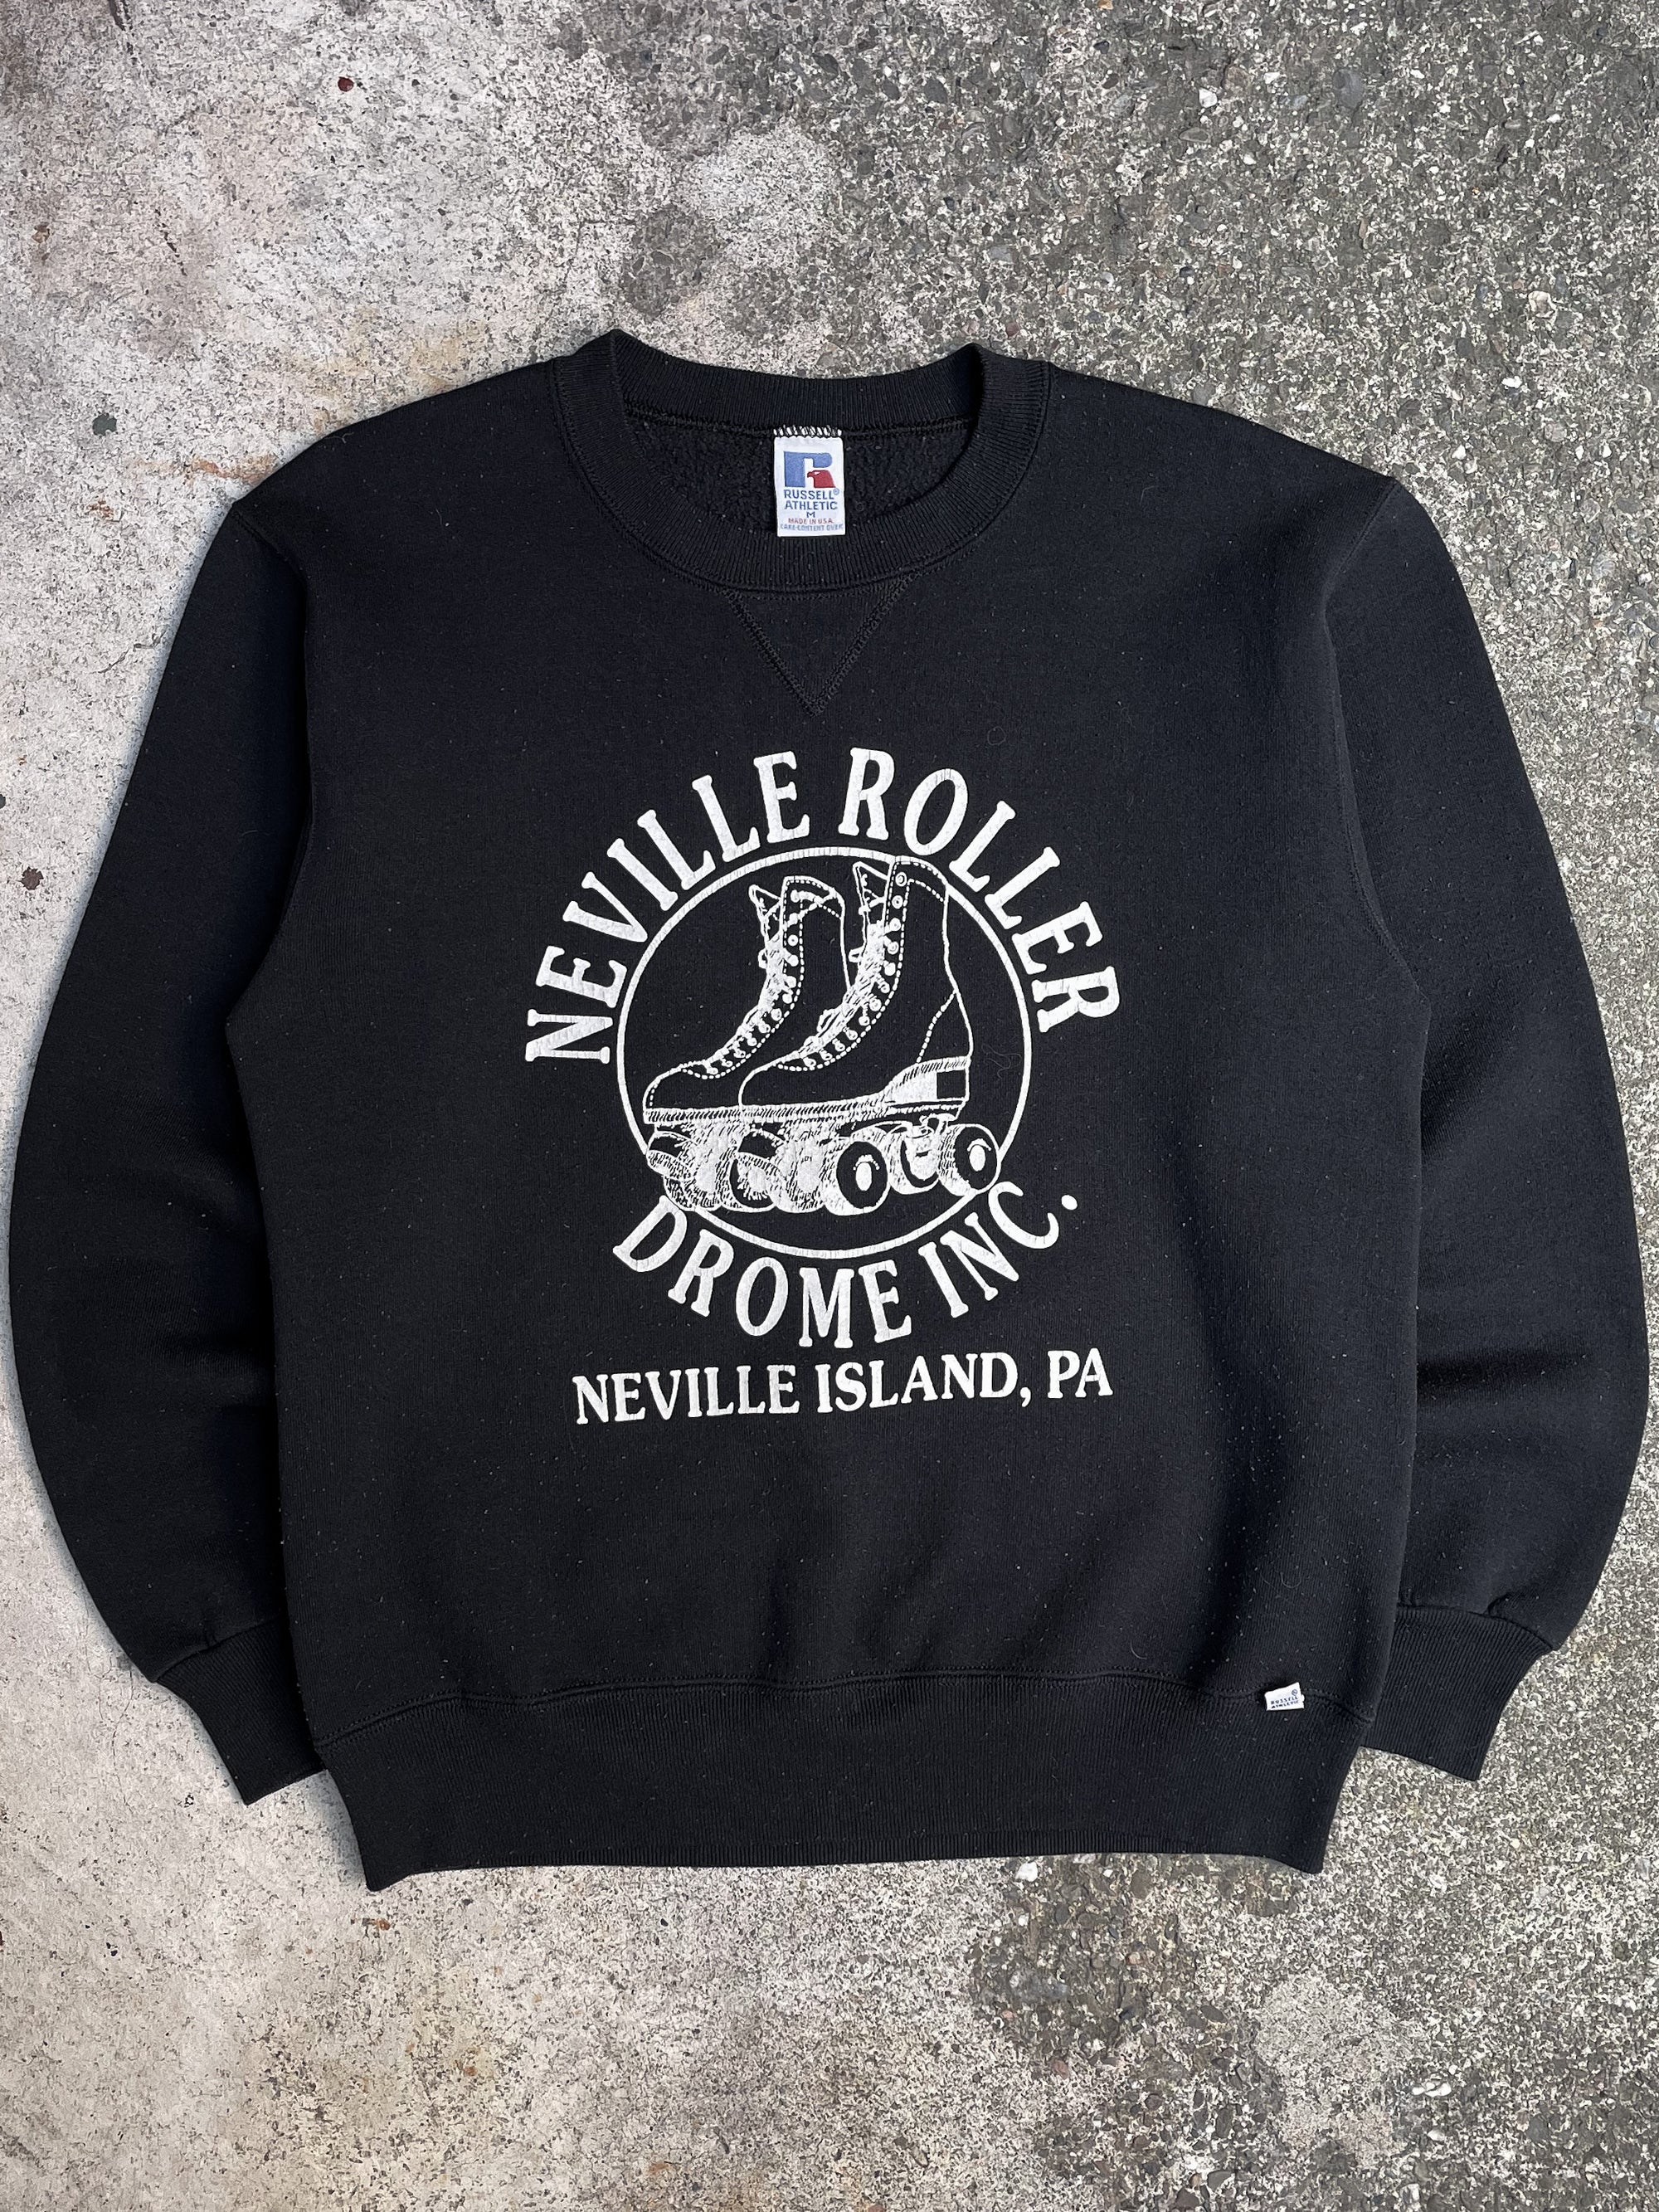 1990s Russell “Neville Roller Drome” Sweatshirt (M)